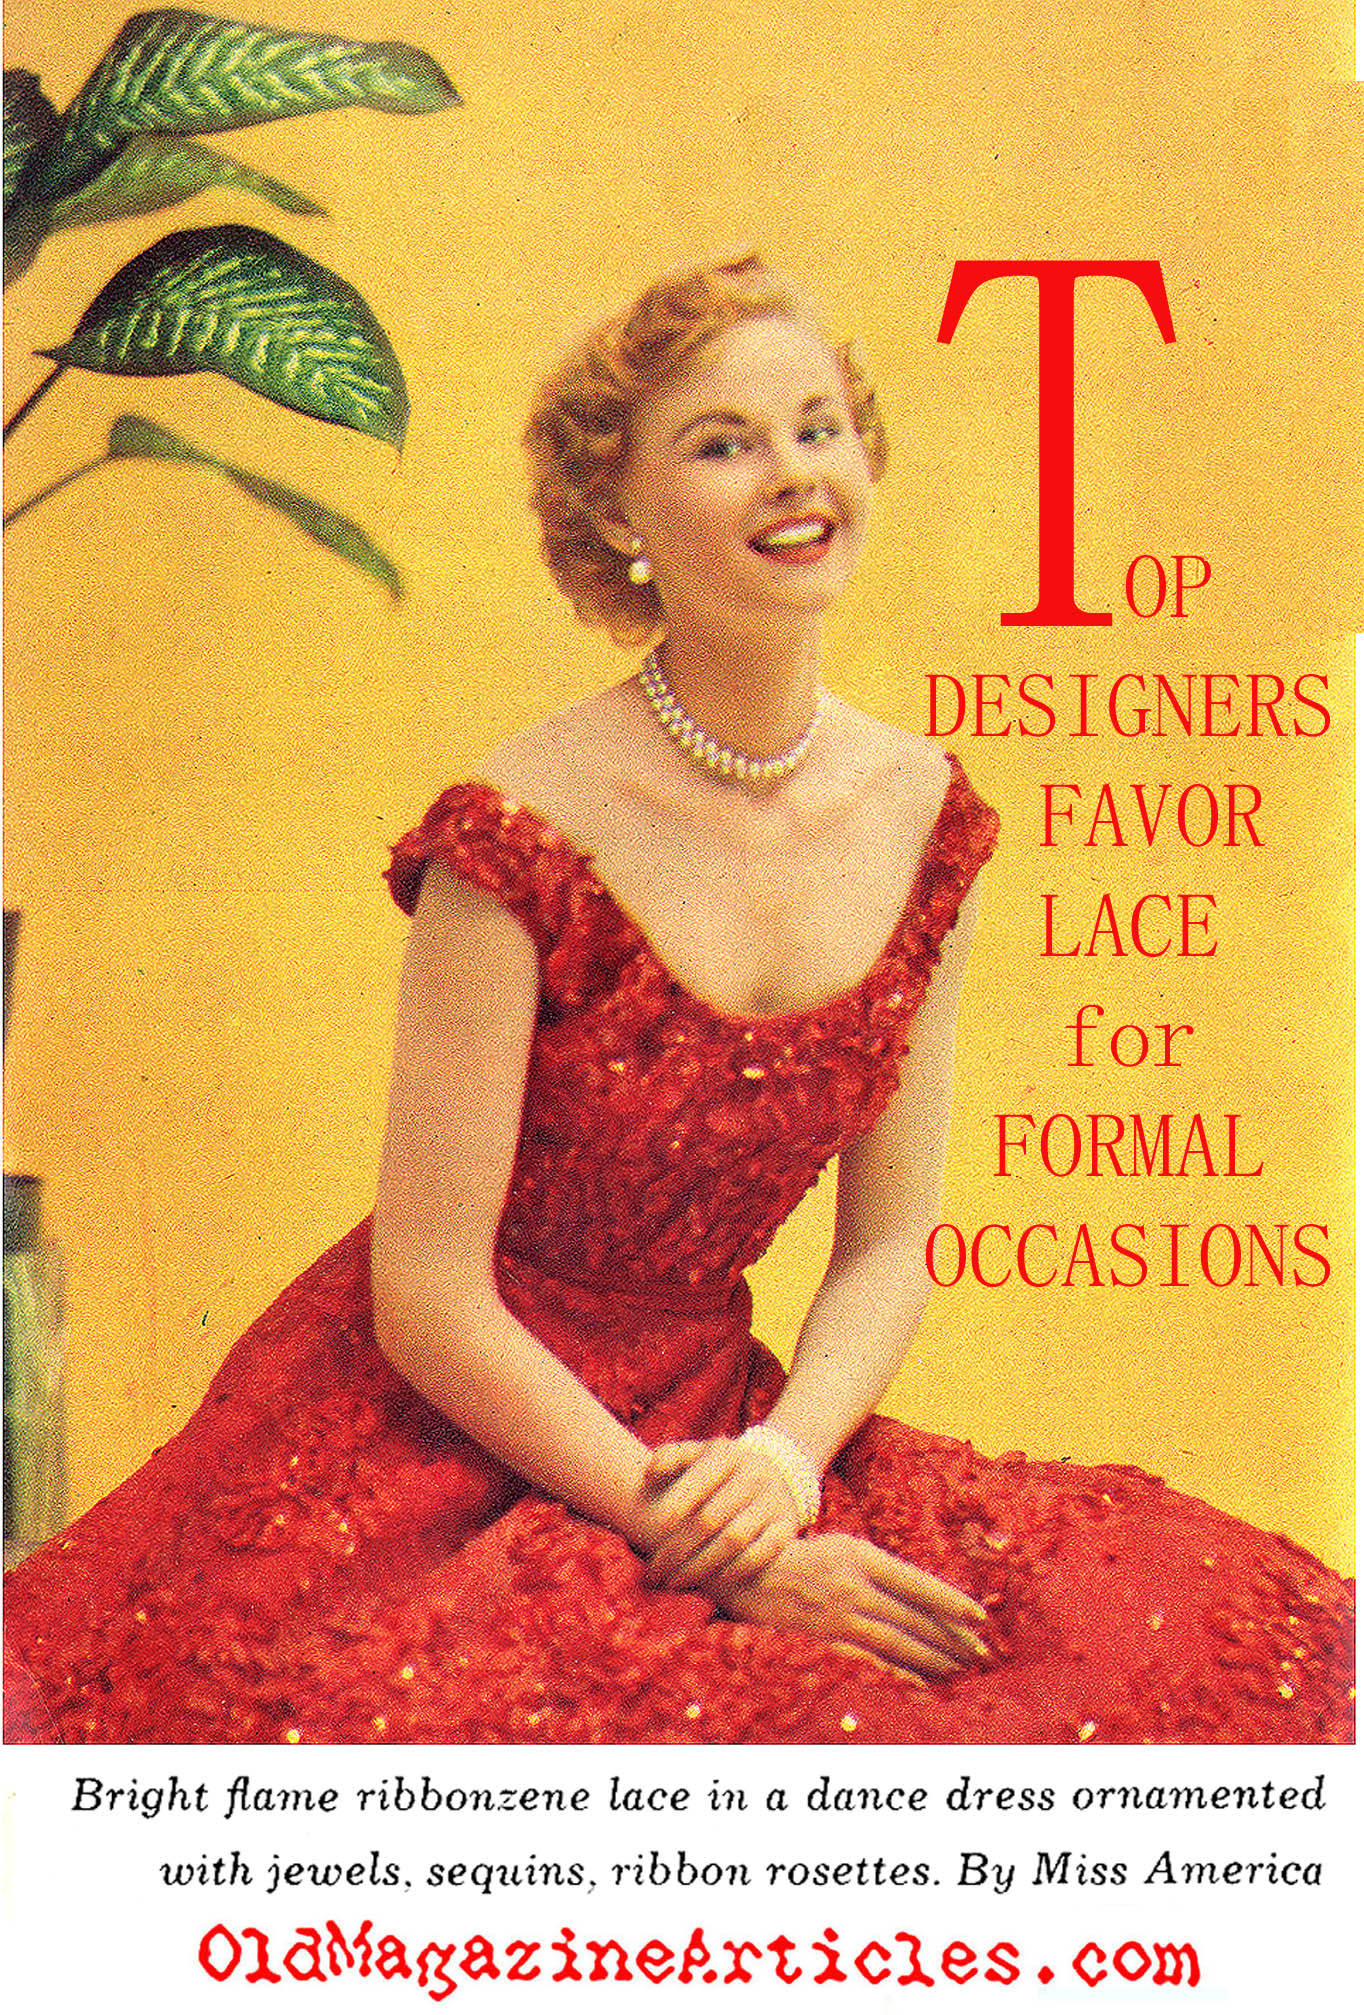 Lace (Quick Magazine, 1953)